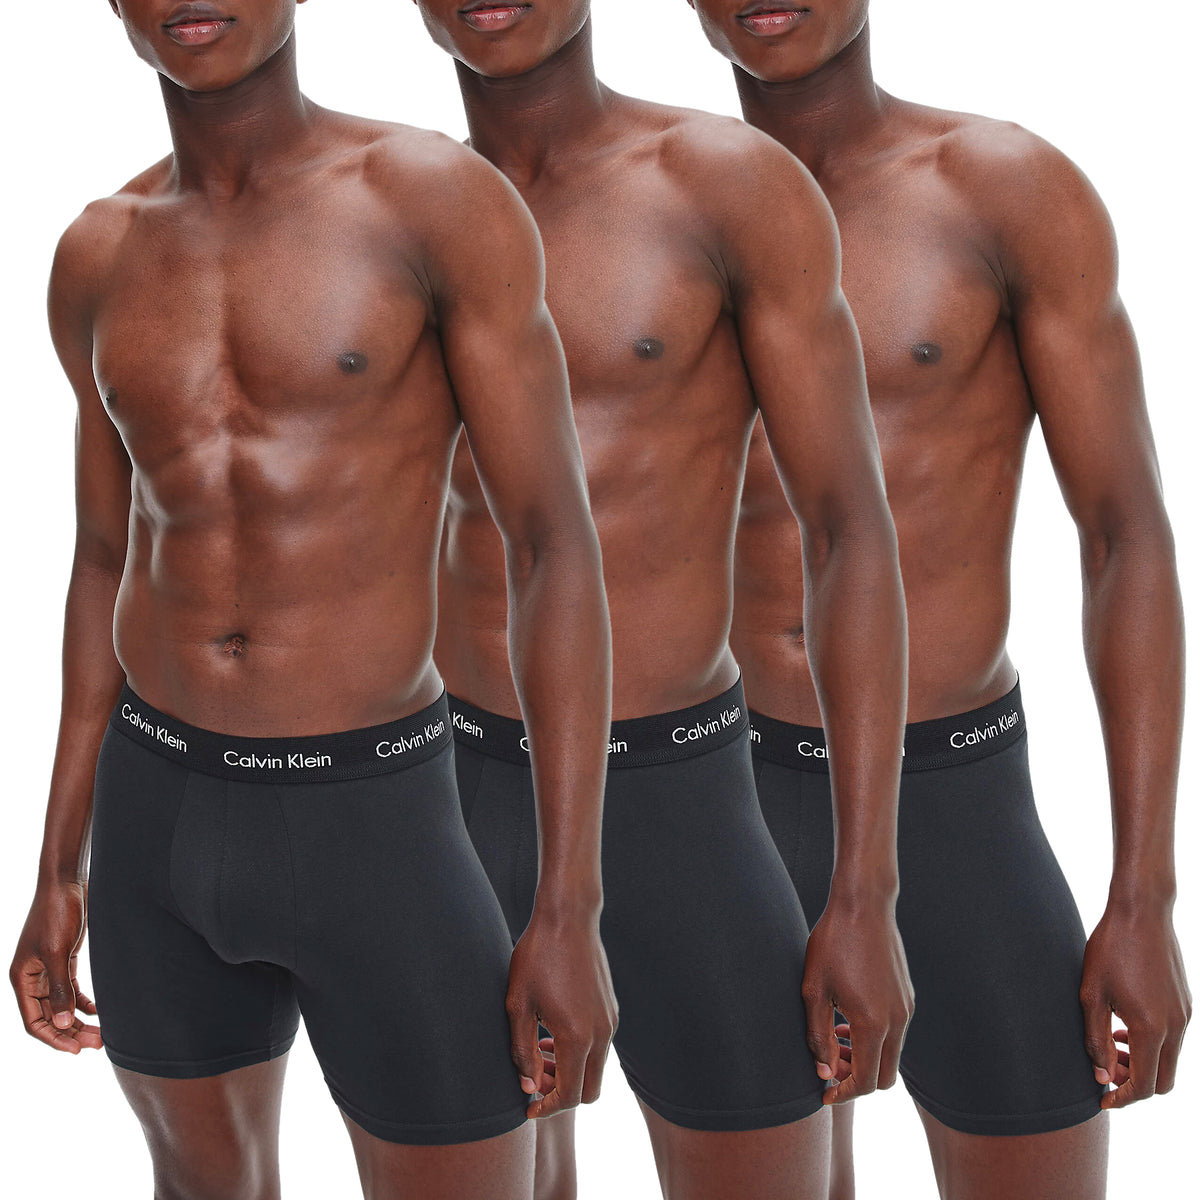 Calvin Klein Mens Boxer Briefs - Classic Fit (3-Pack), 01, Nb1770A, Black/Black/Black